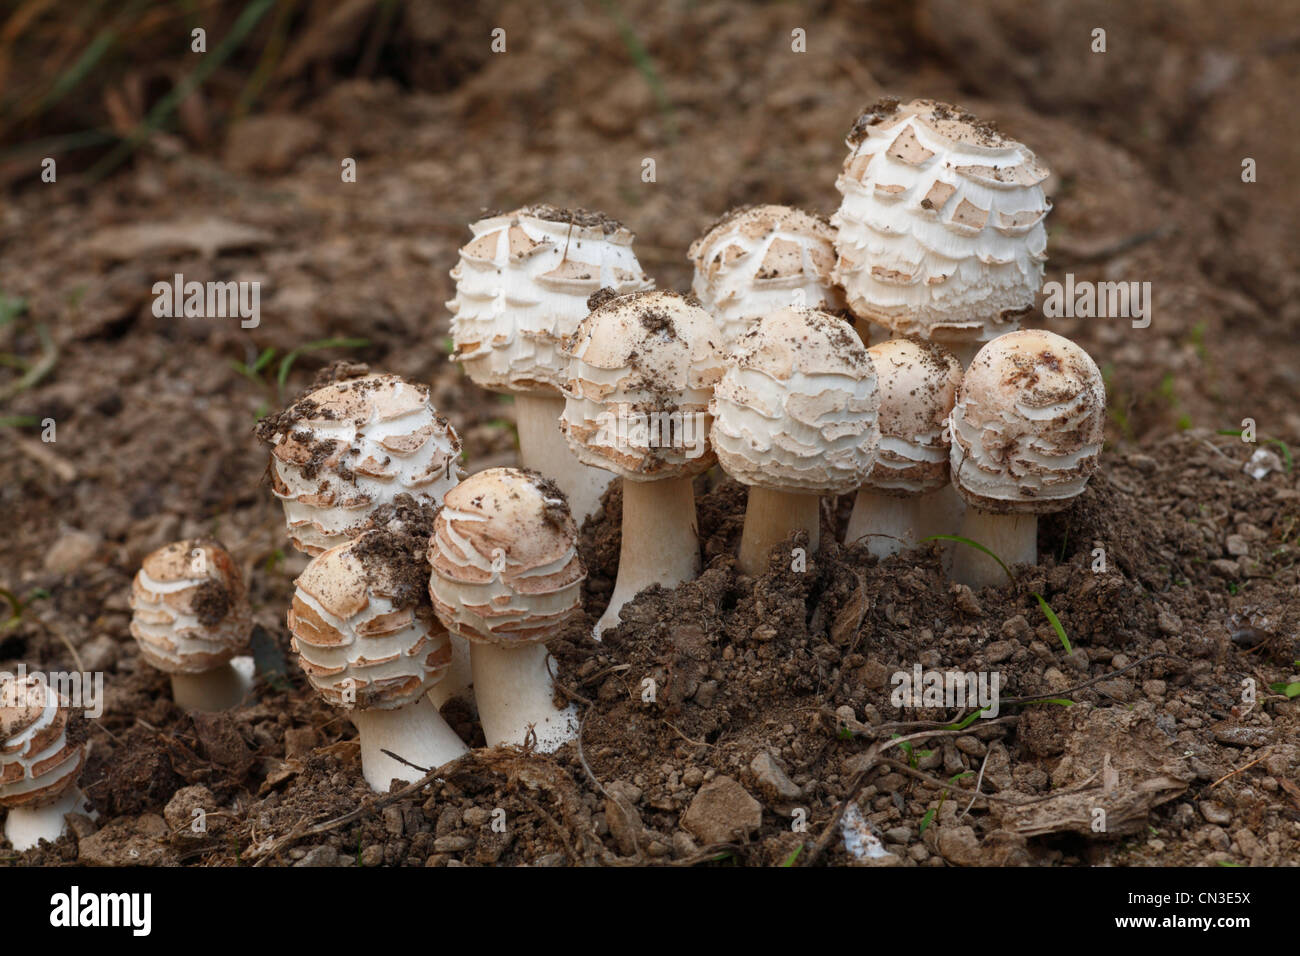 Shaggy Parasol funghi Macrolepiota rhacodes) gruppo di corpi fruttiferi in eruzione dal suolo. Powys, Galles. Ottobre. Foto Stock